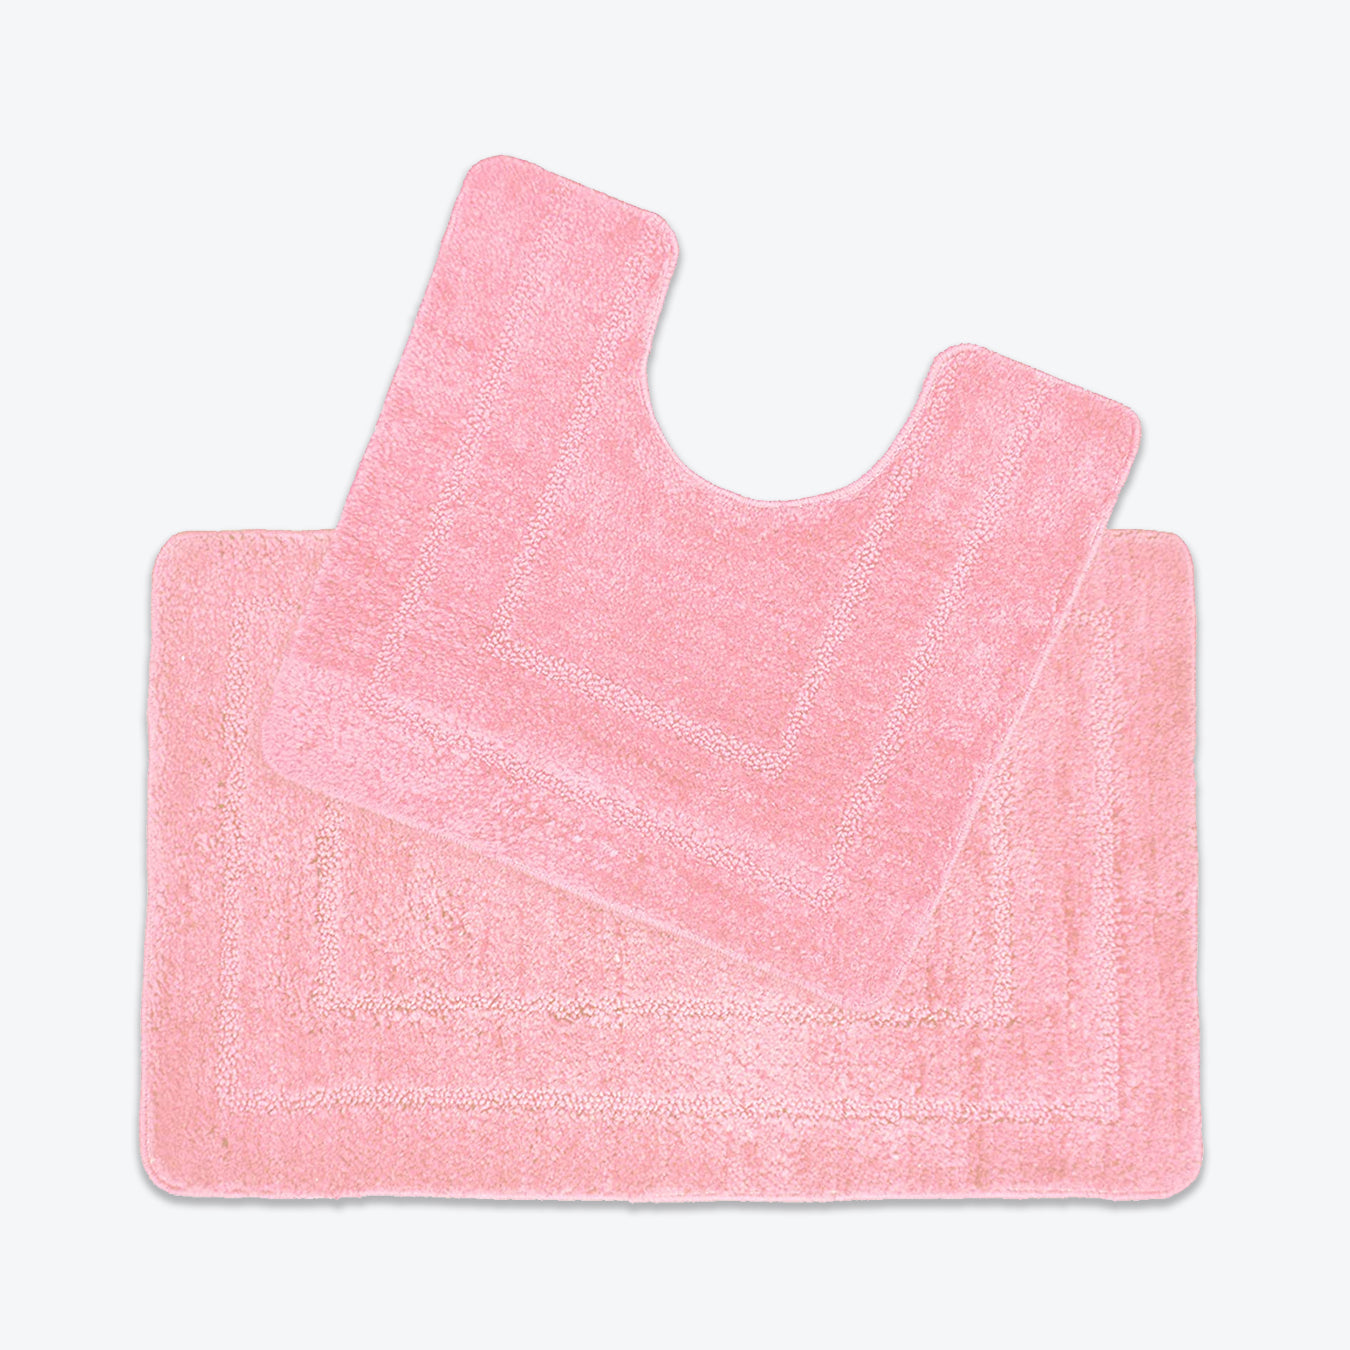 Blush Pink Bath Mat and Pedestal Mat 2pc Bathroom Set Luxury Microfibre Super Soft and Non Slip Mats